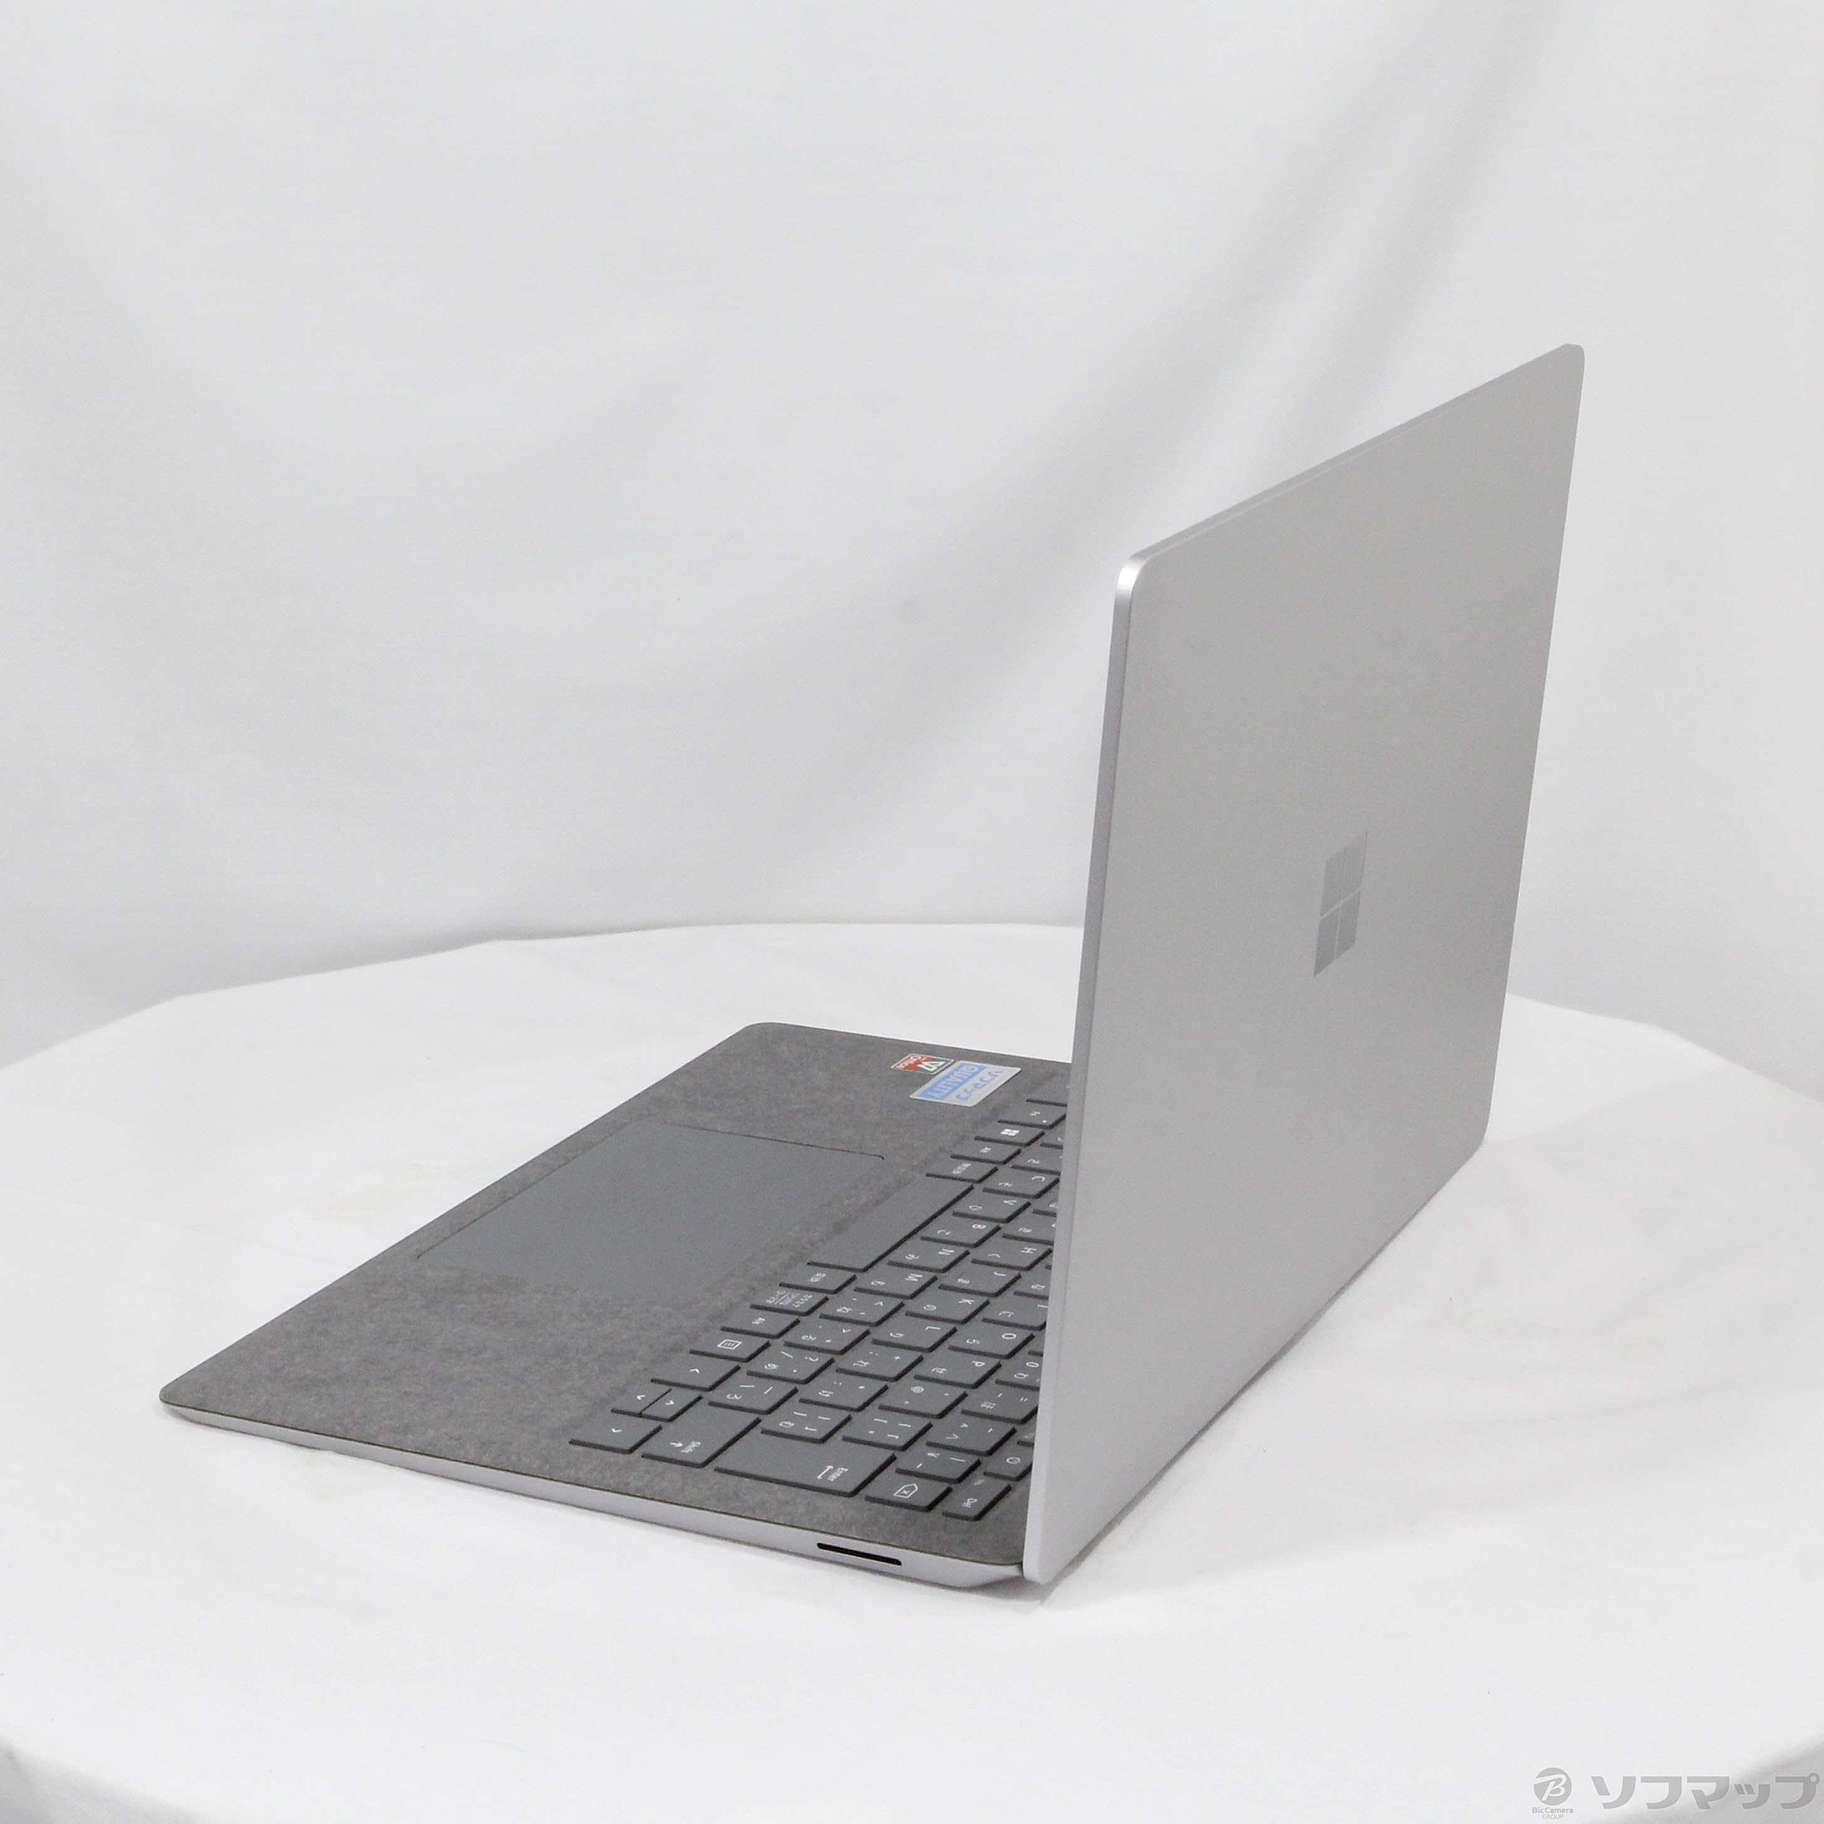 Microsoft Surface Laptop 5PB‐00046